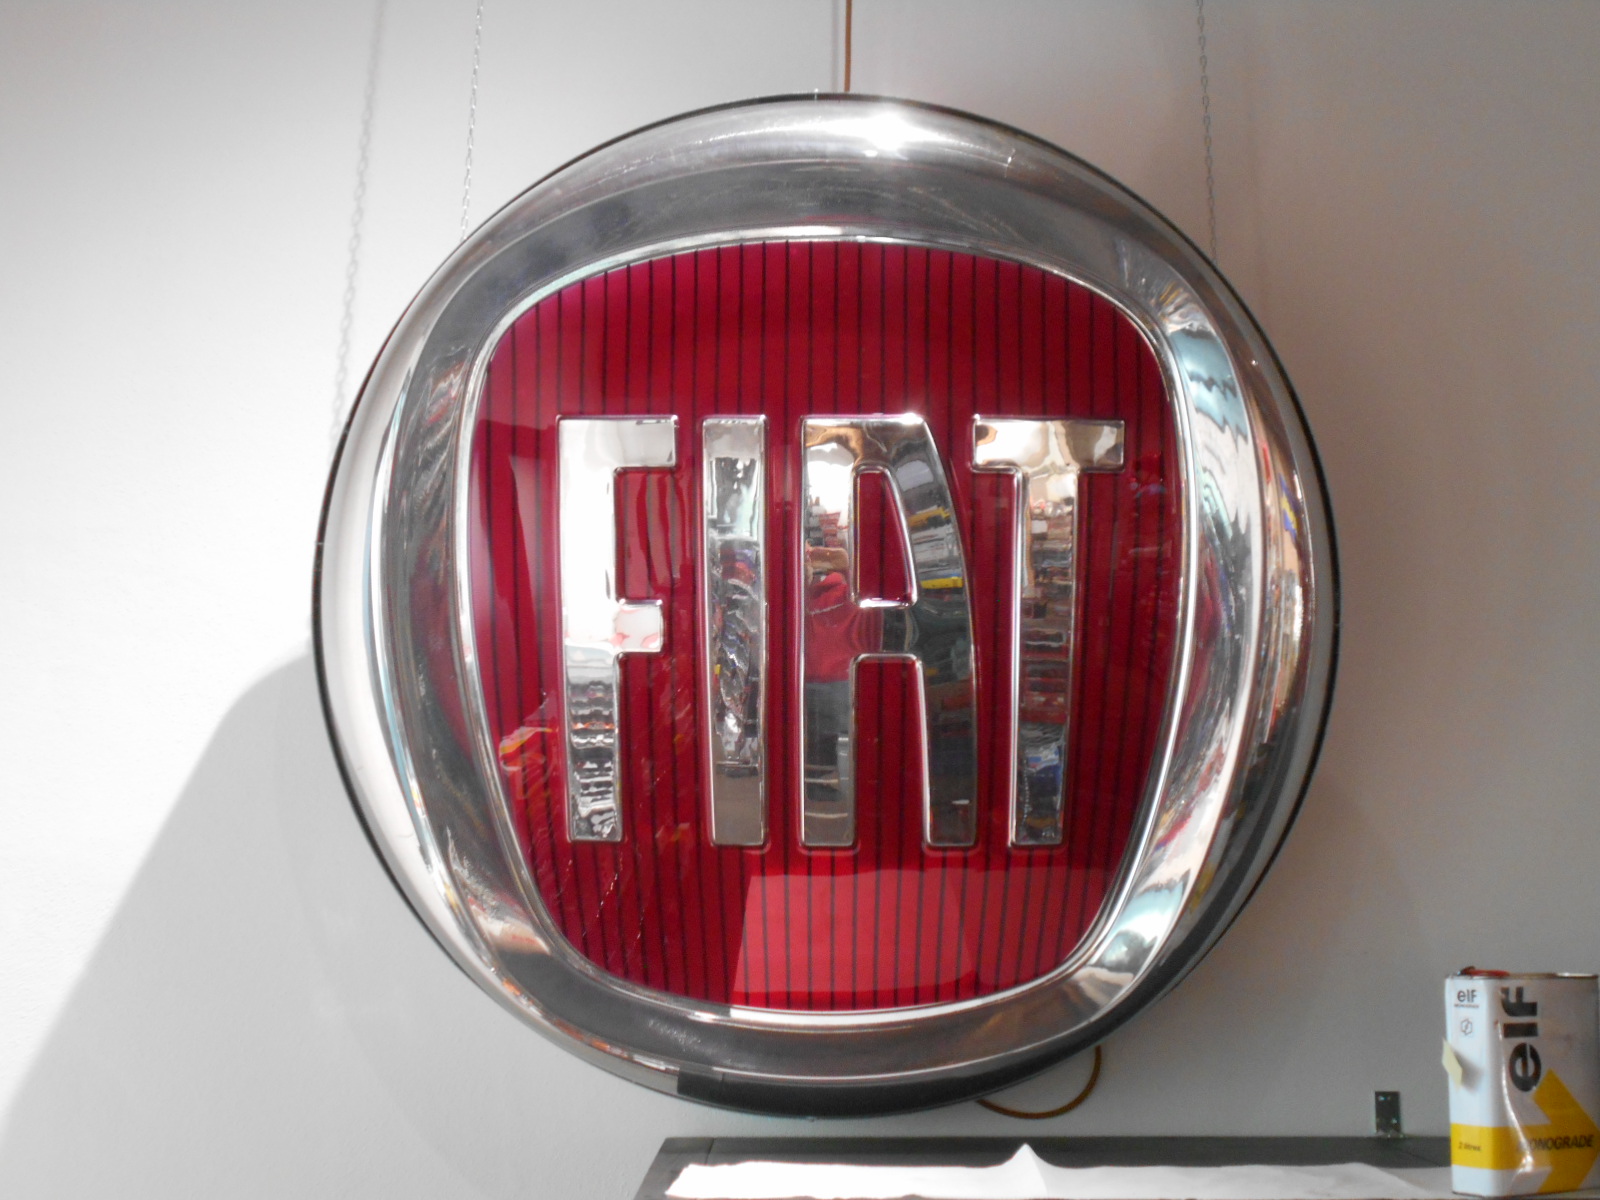 Targa Fiat, illuminazione interna funzionante